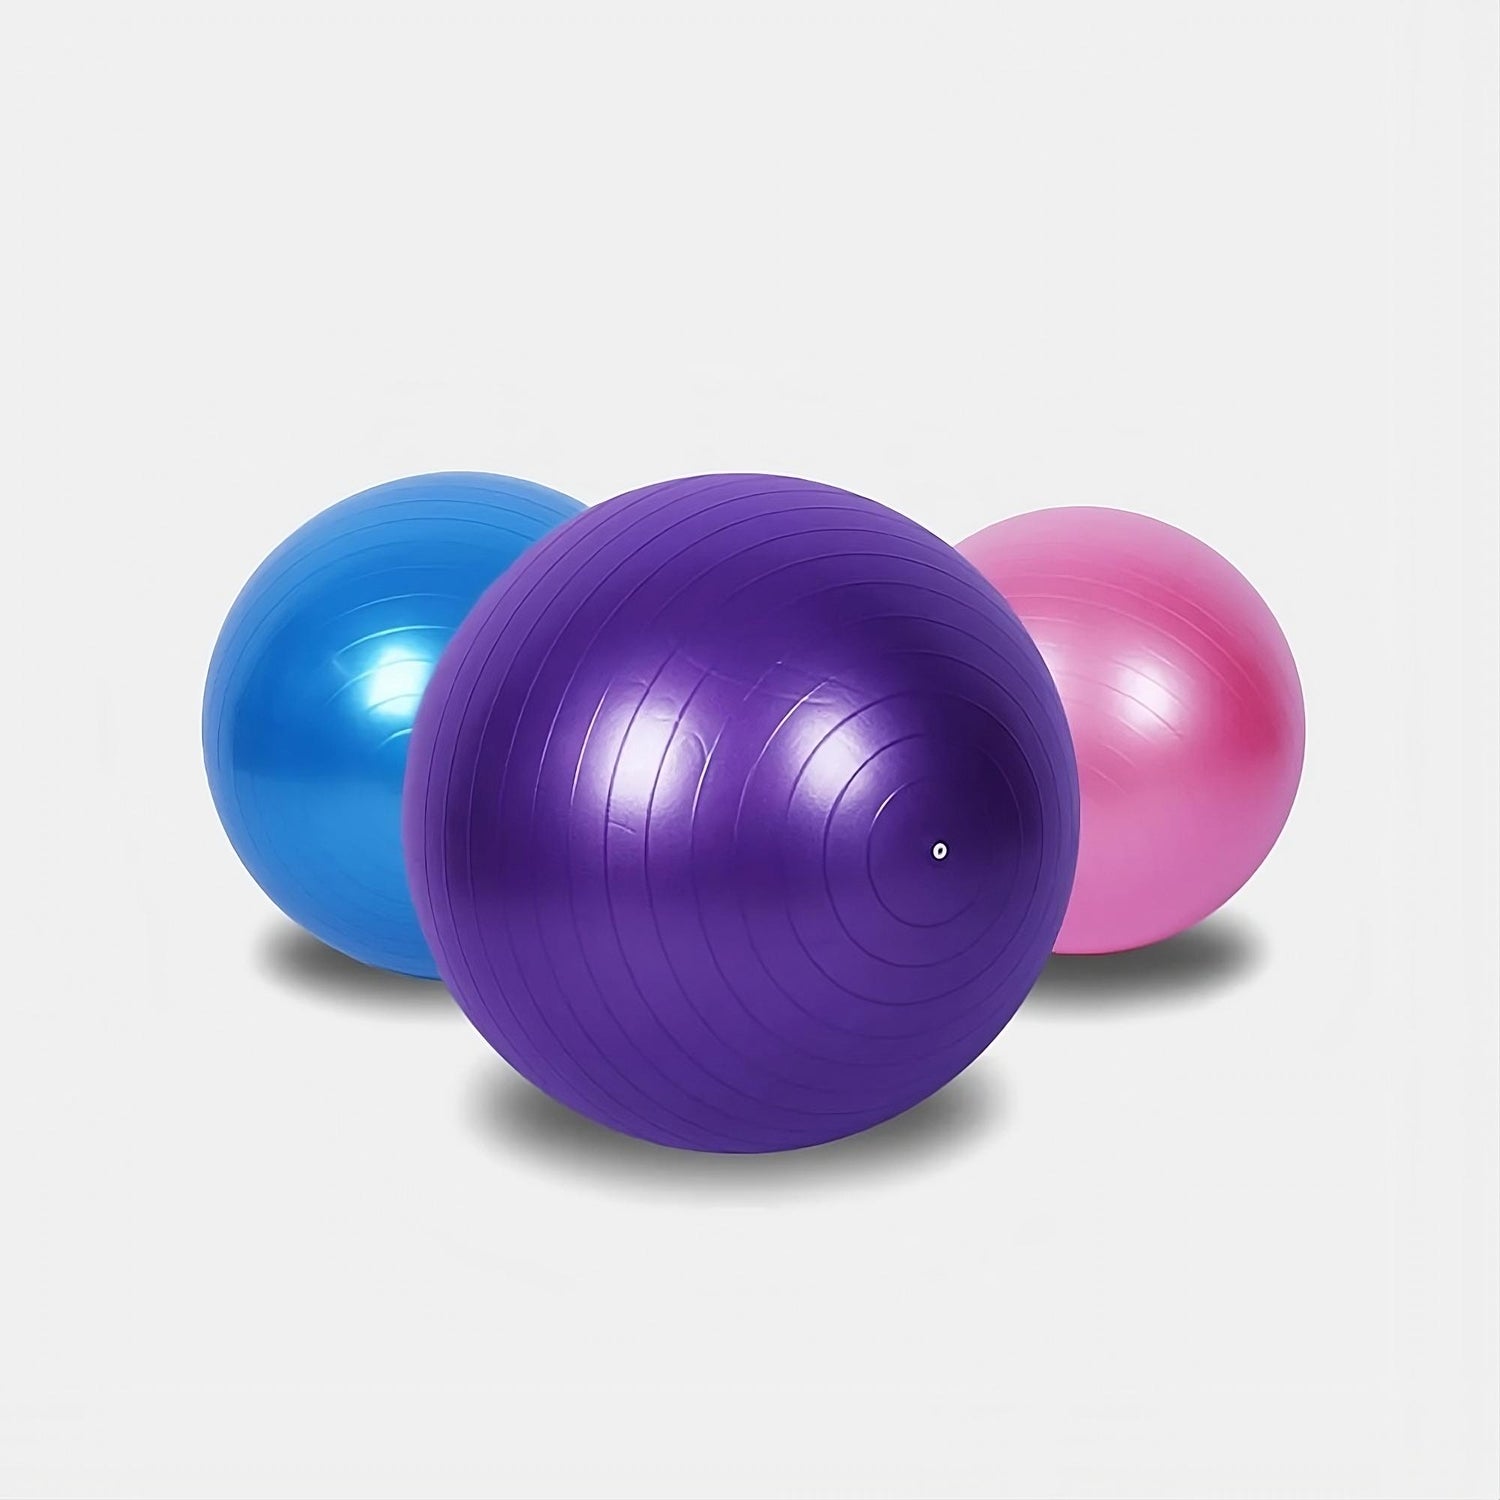 Ballons et balles de pilates